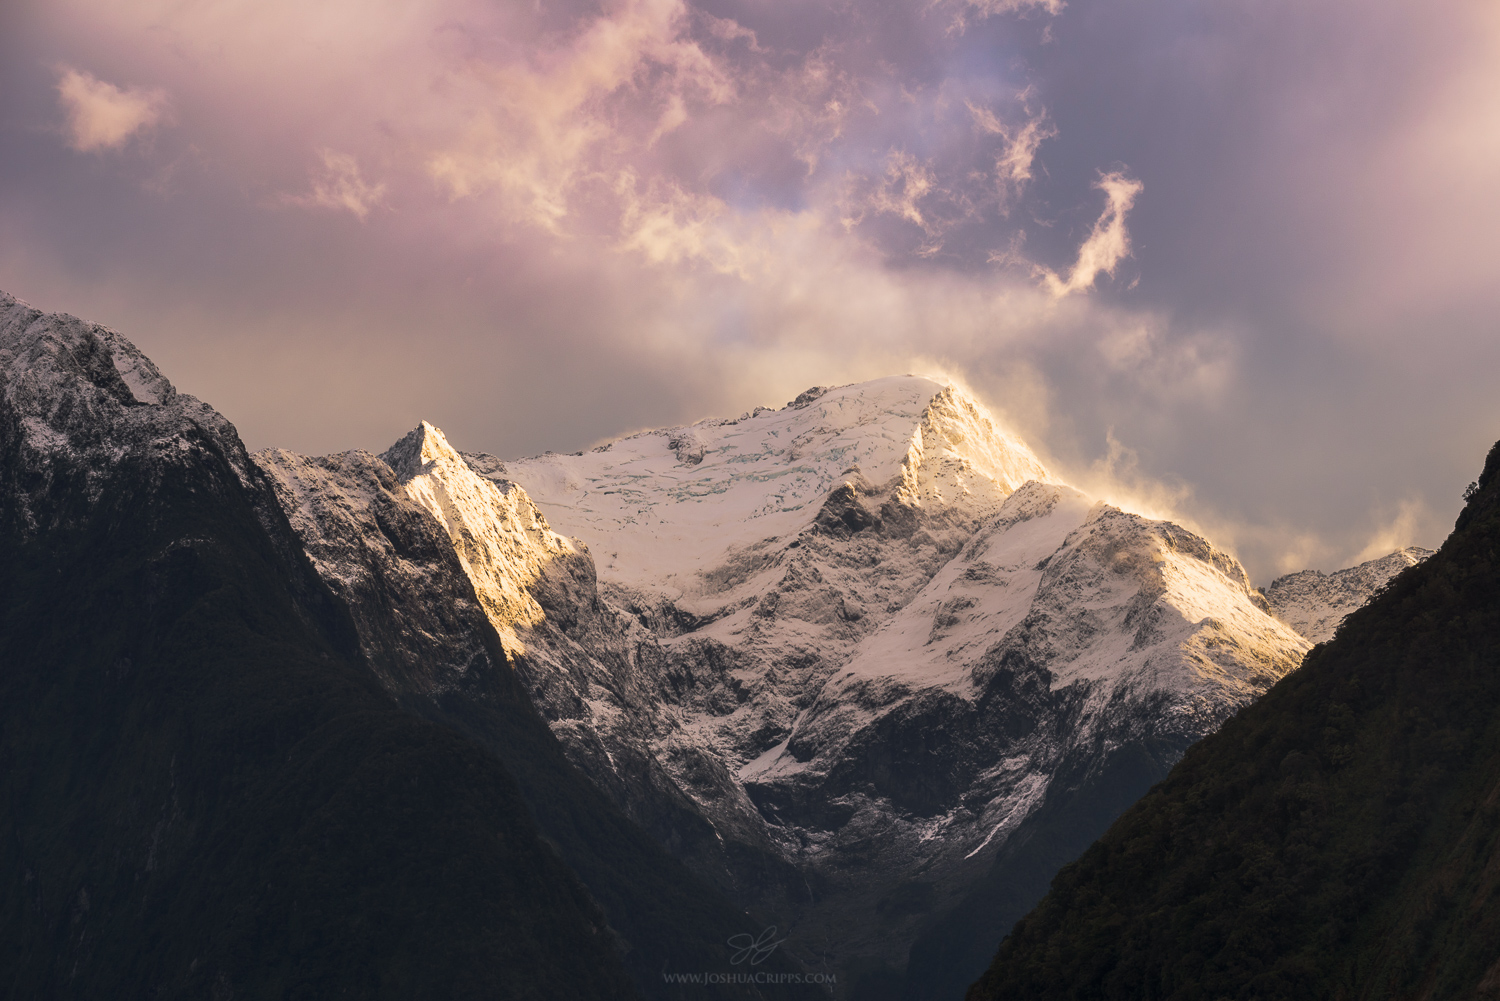 Mt. Pembroke, New Zealand, May 15th, 2015